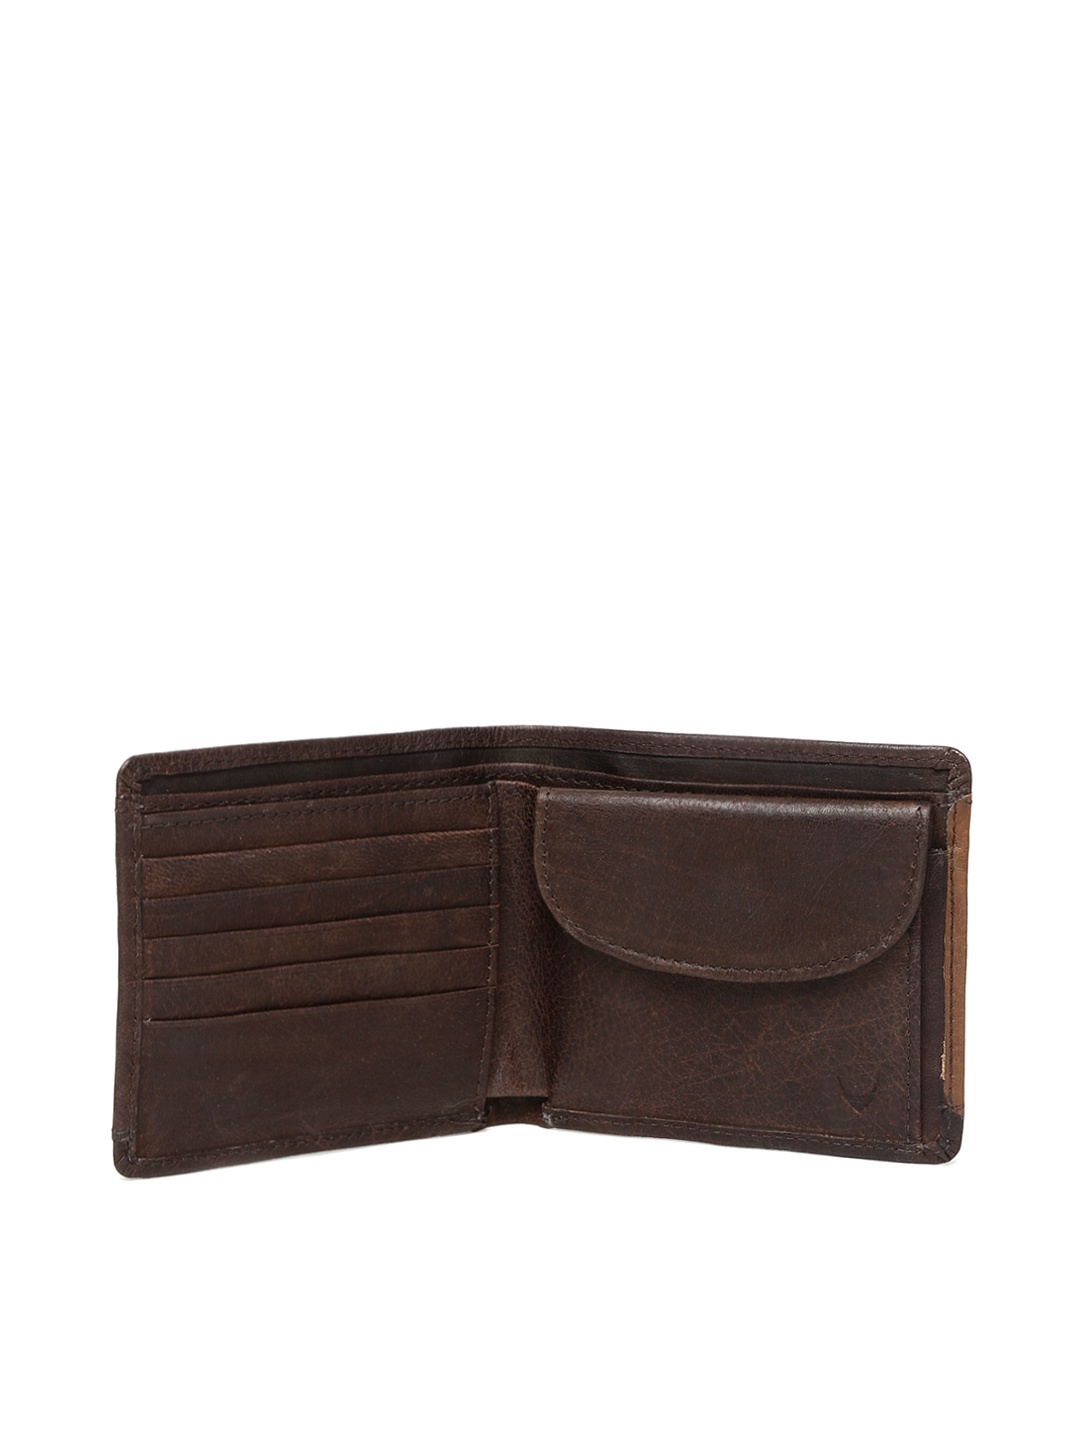 Myntra Hidesign Men Brown Leather Wallet 814994 | Buy Myntra Hidesign Wallets at best price ...